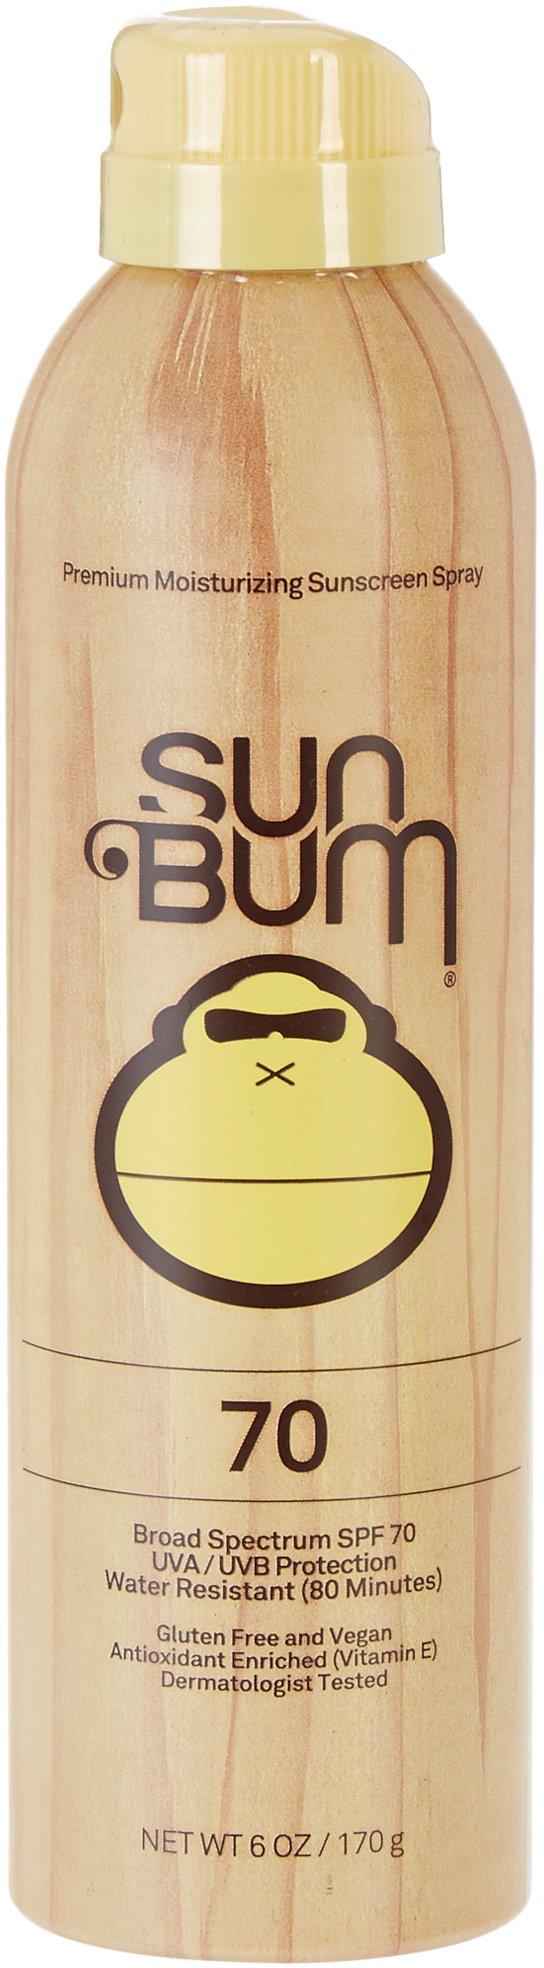 Sun Bum SPF 70 Premium Moisturizing Sunscreen Spray